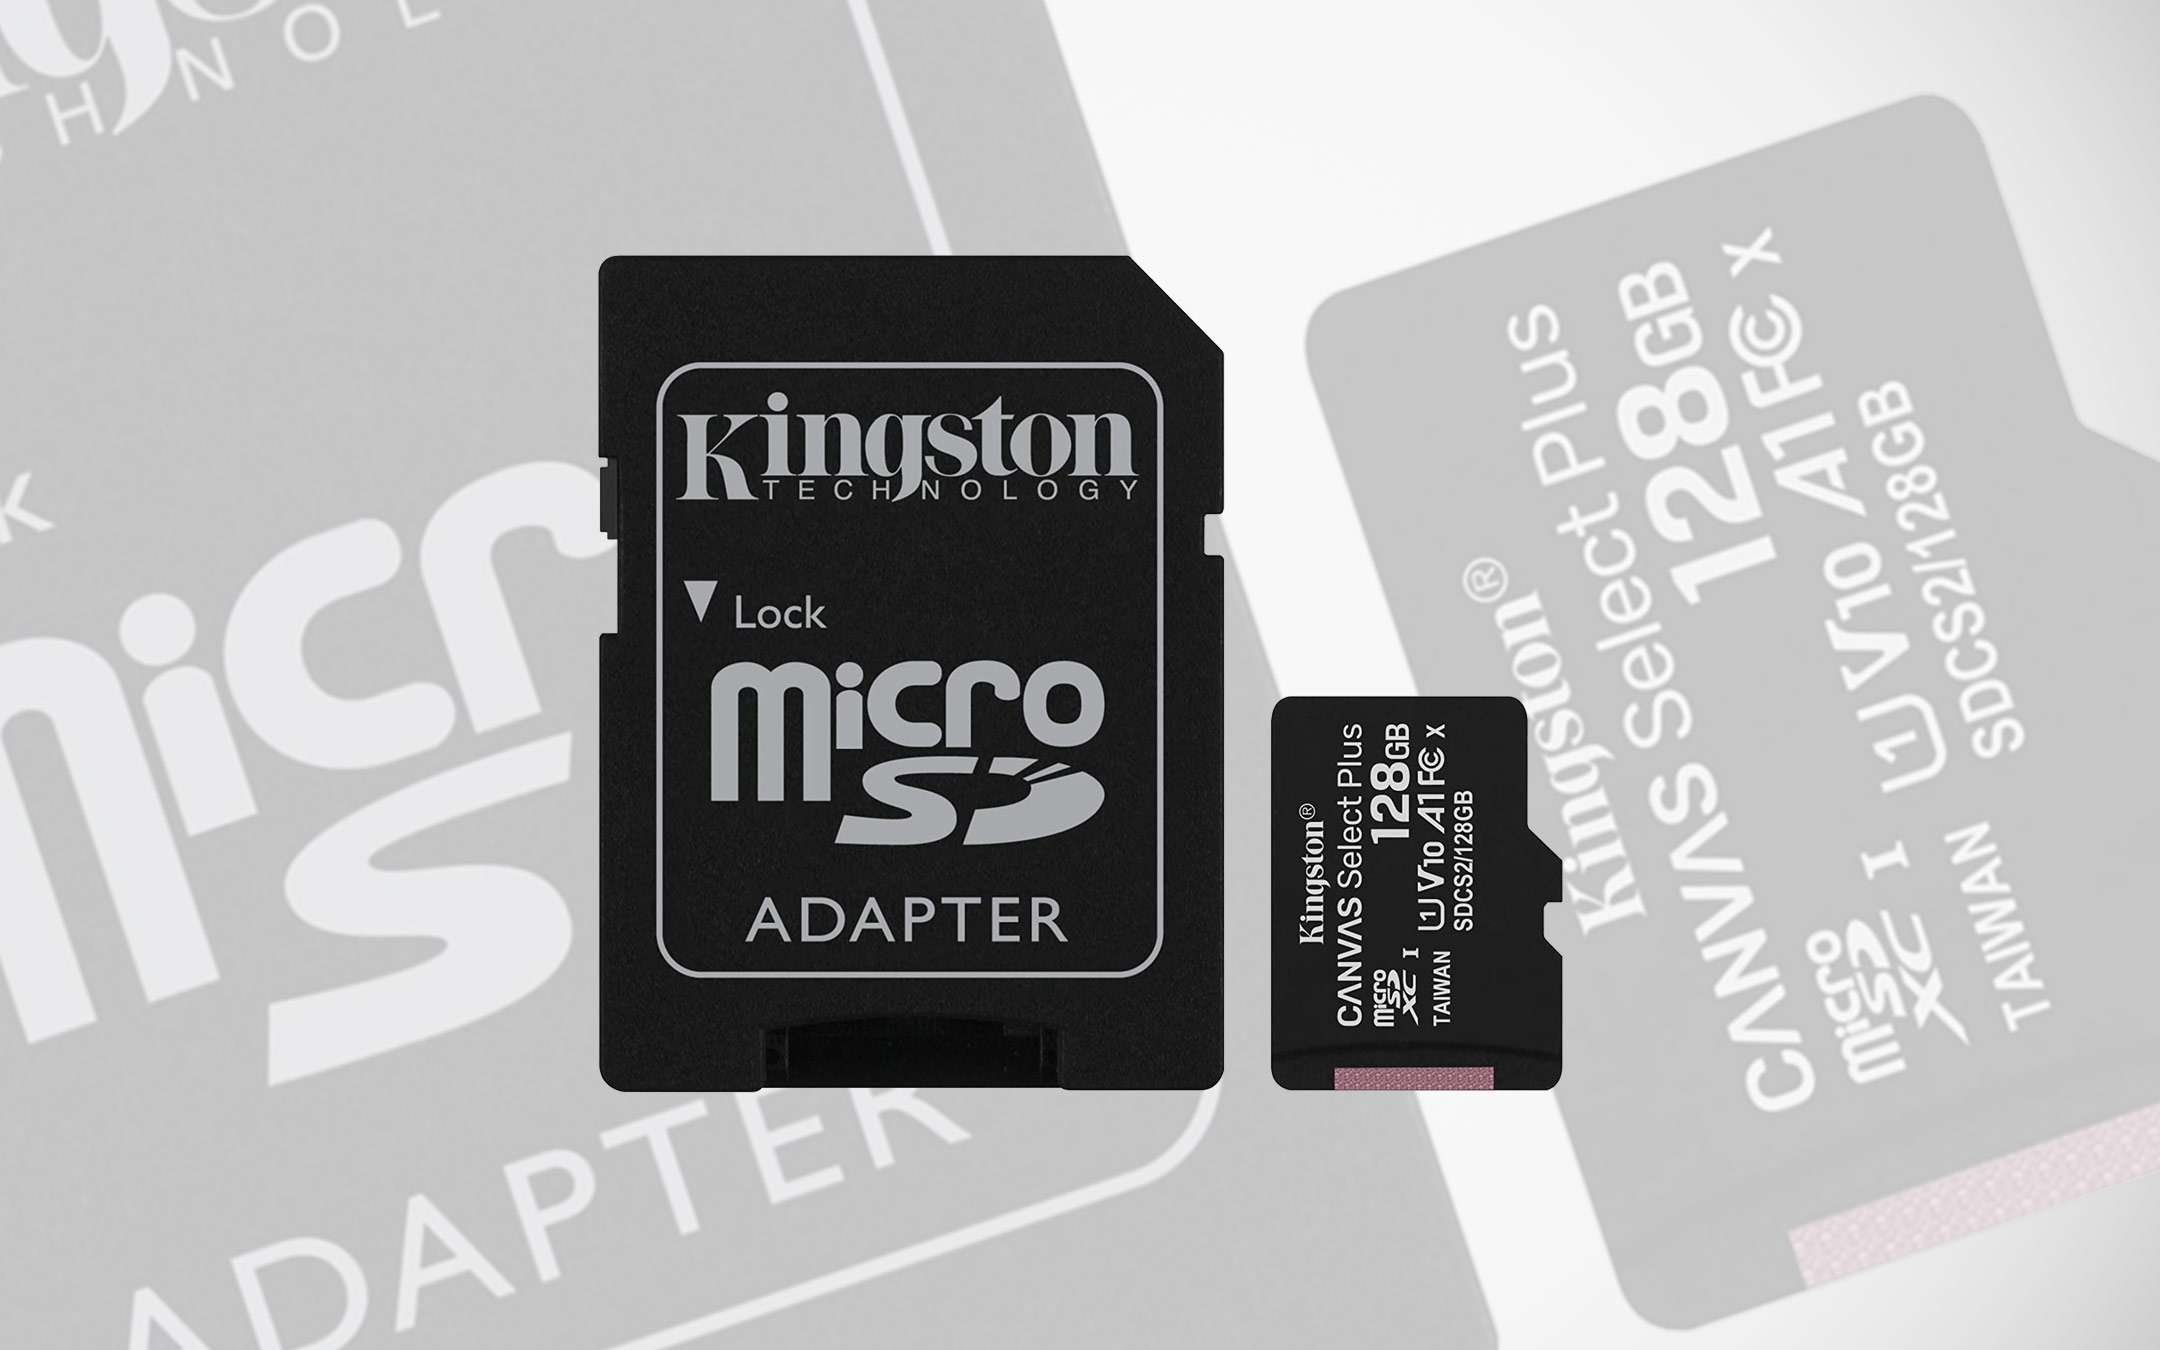 Only 17 euros for Kingston's 128 GB microSD